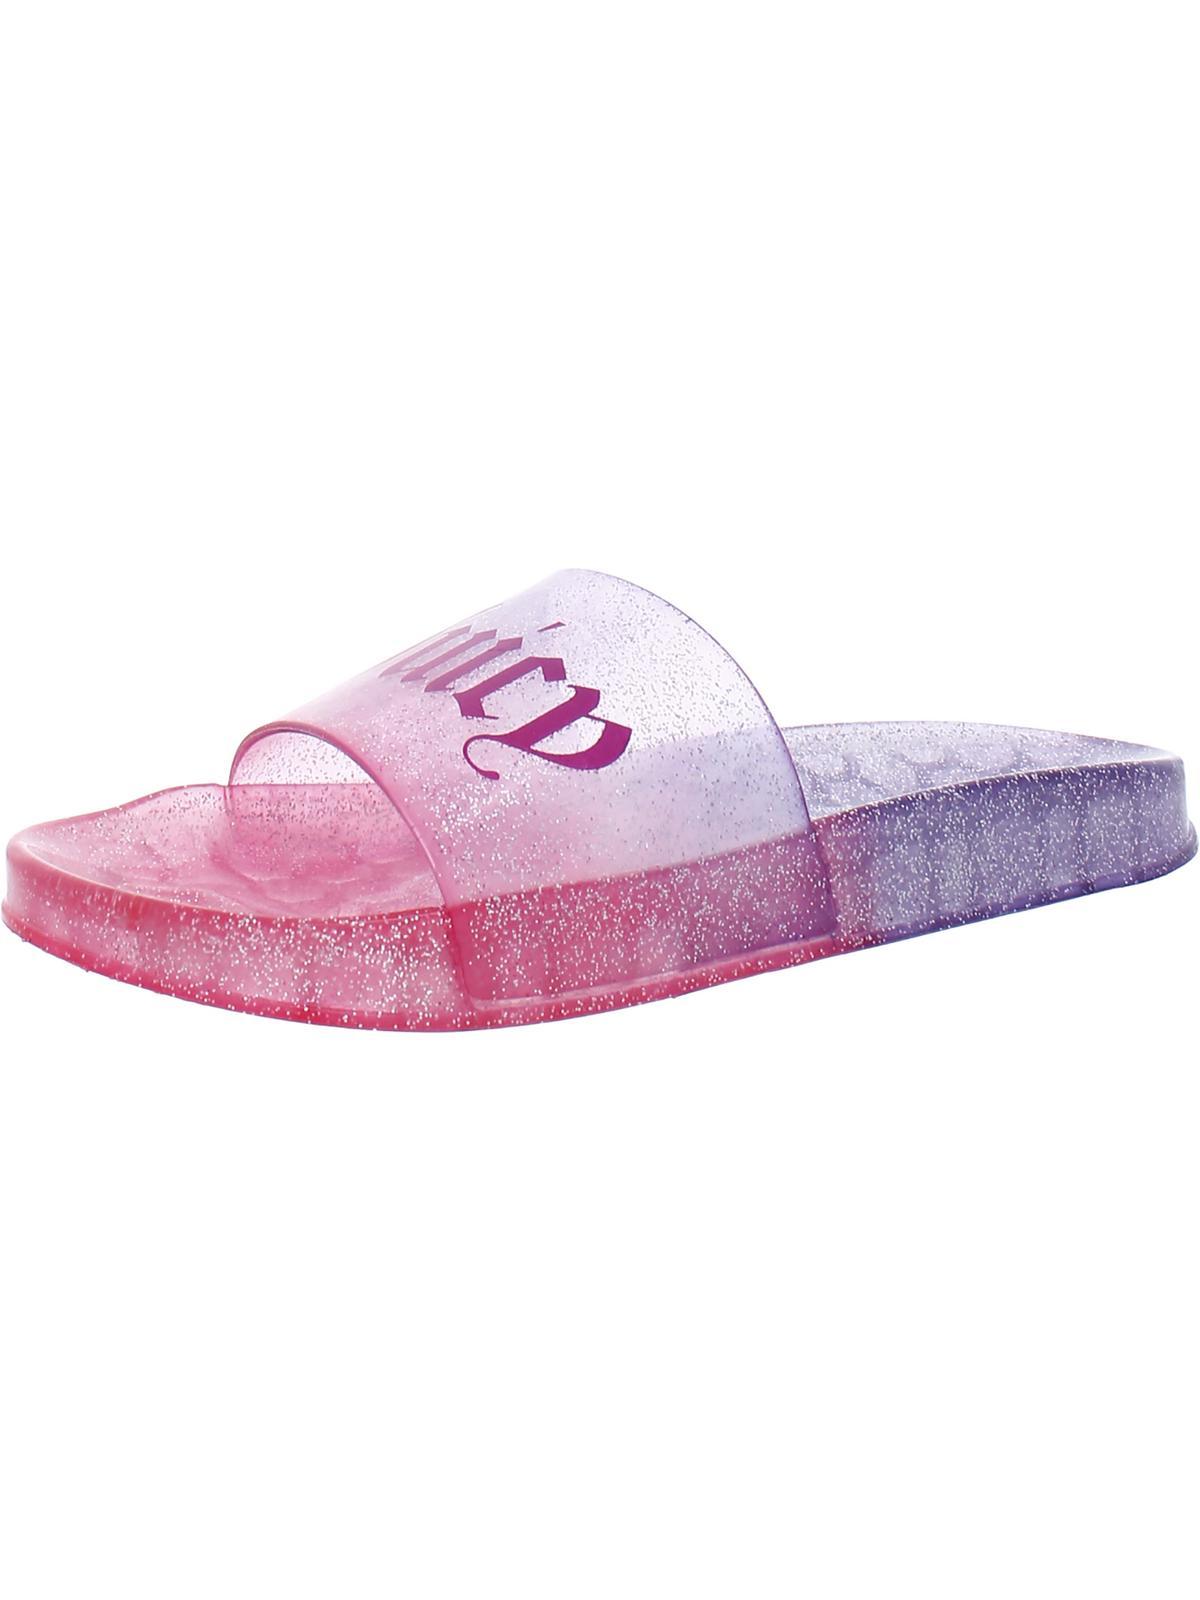 Juicy Couture Bex Slip On Pool Slide Sandals in Pink | Lyst